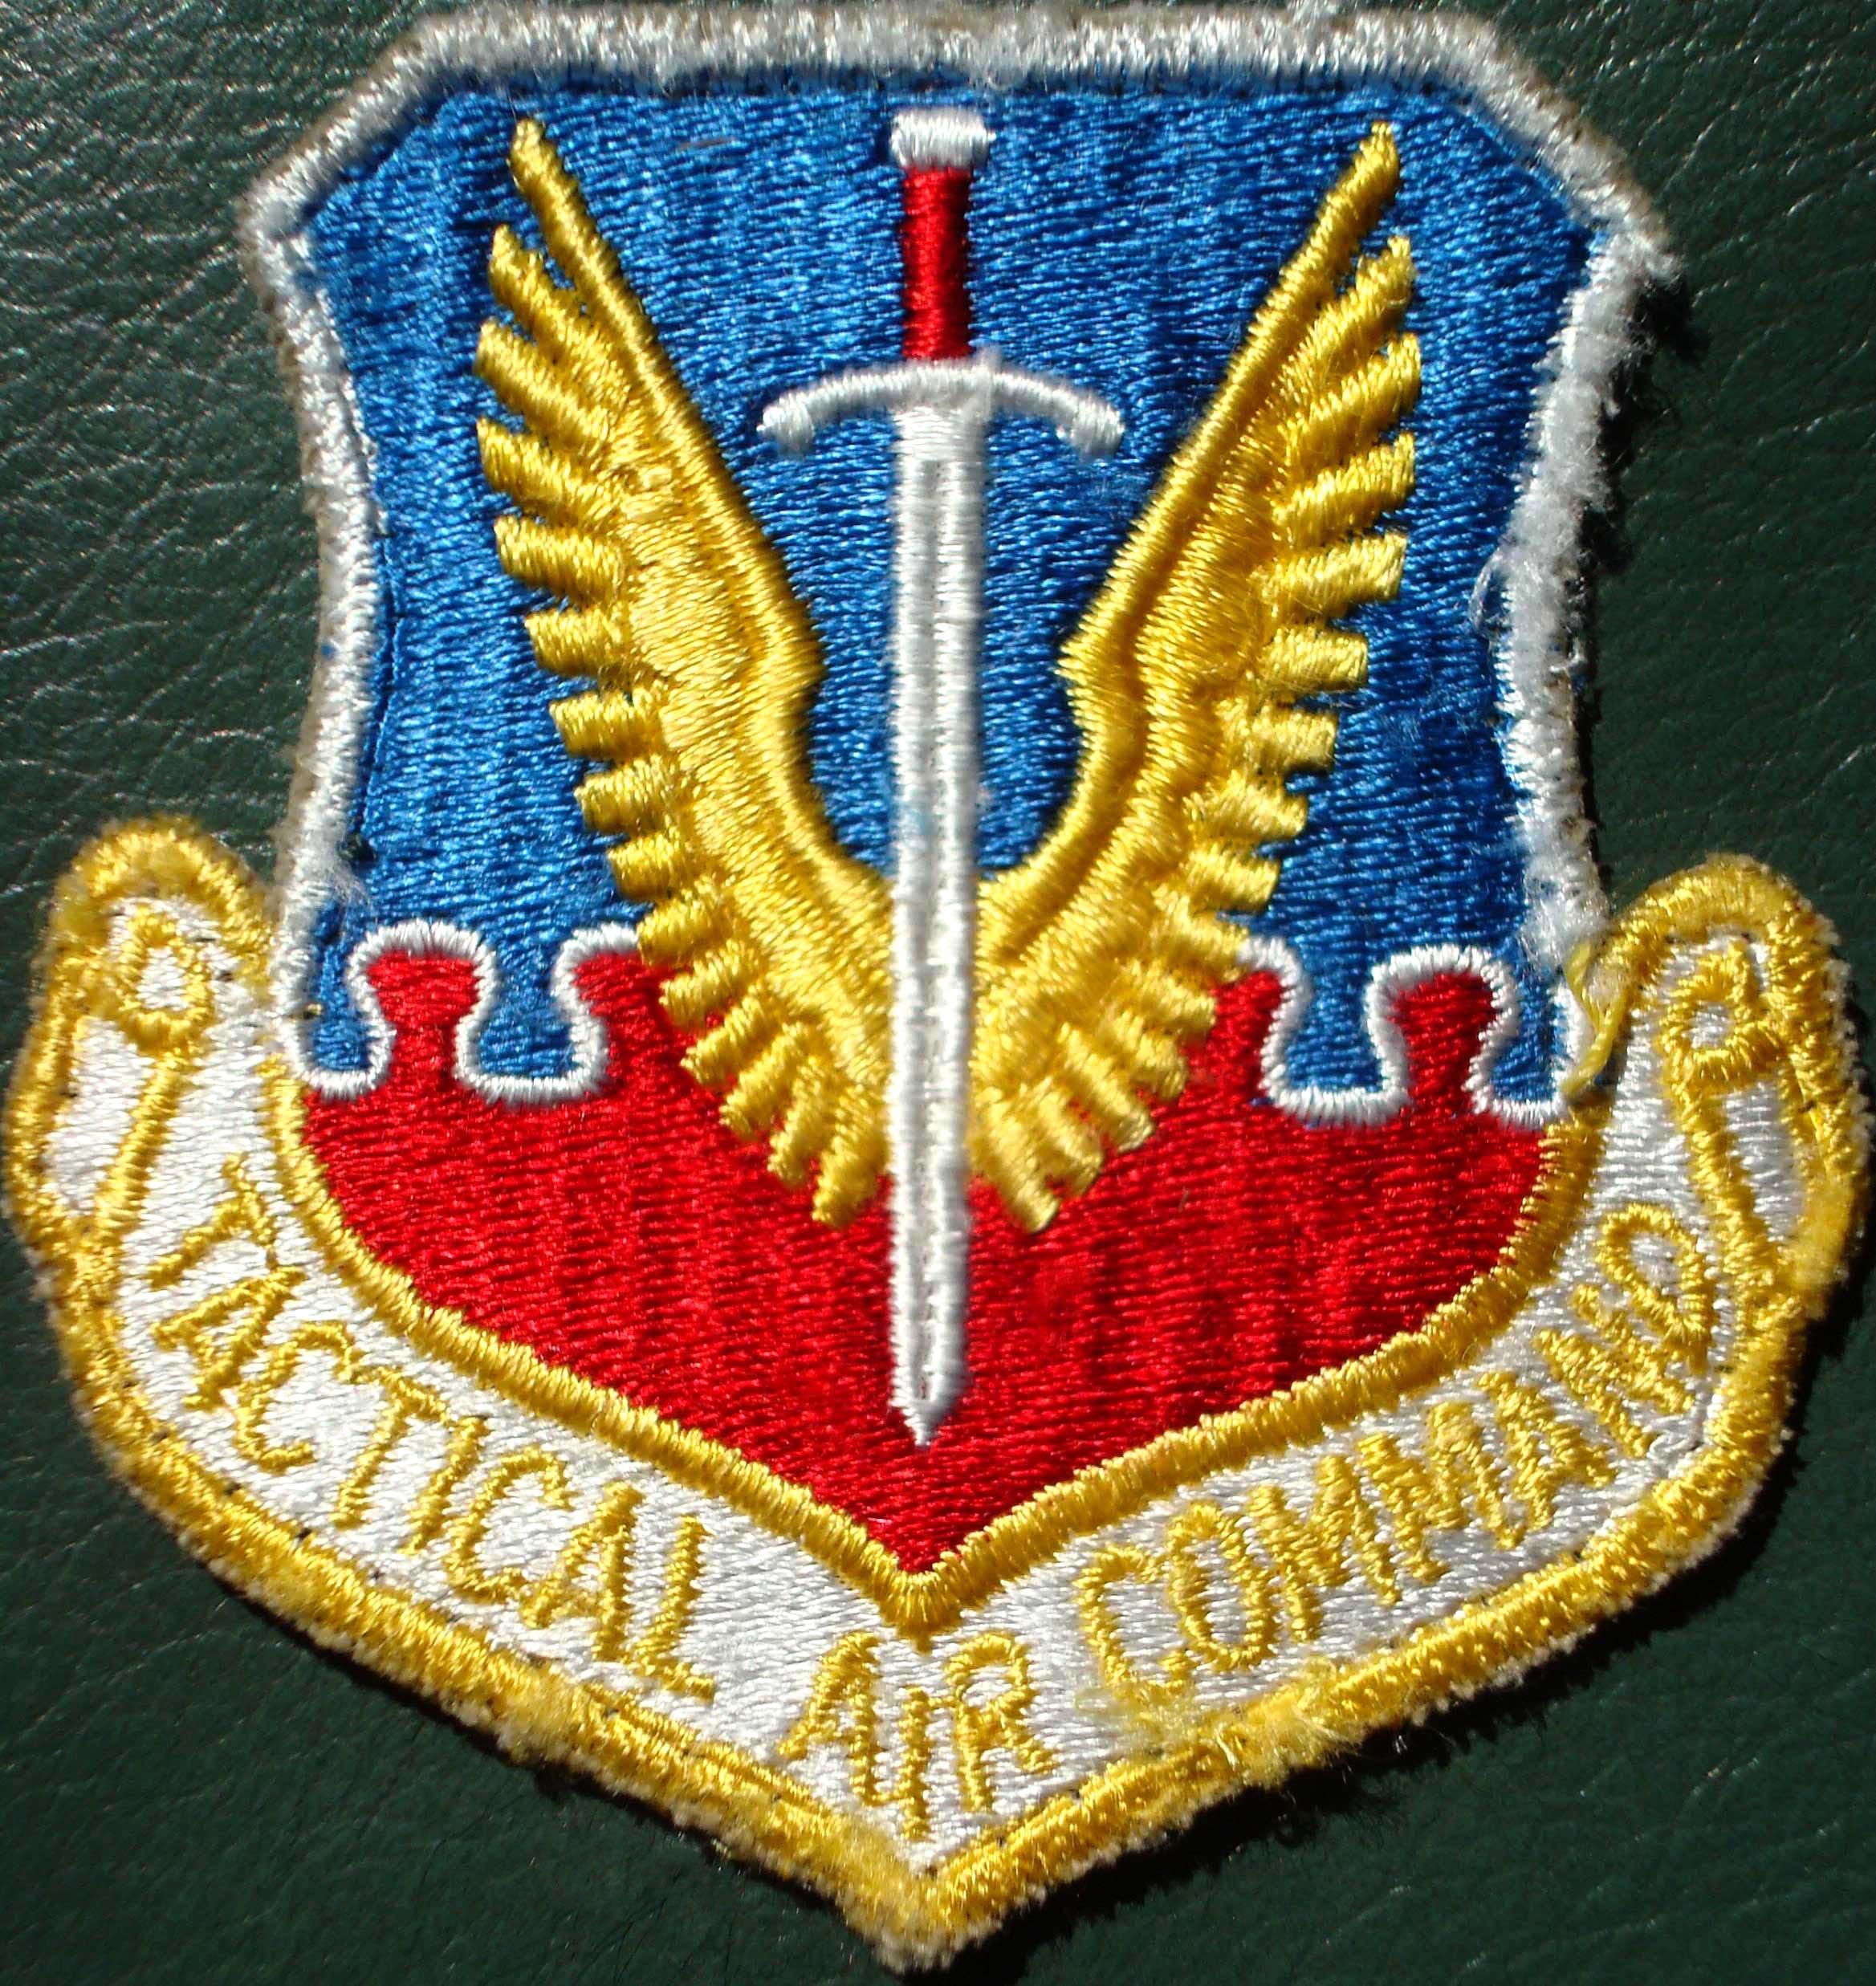 Squadron Patches